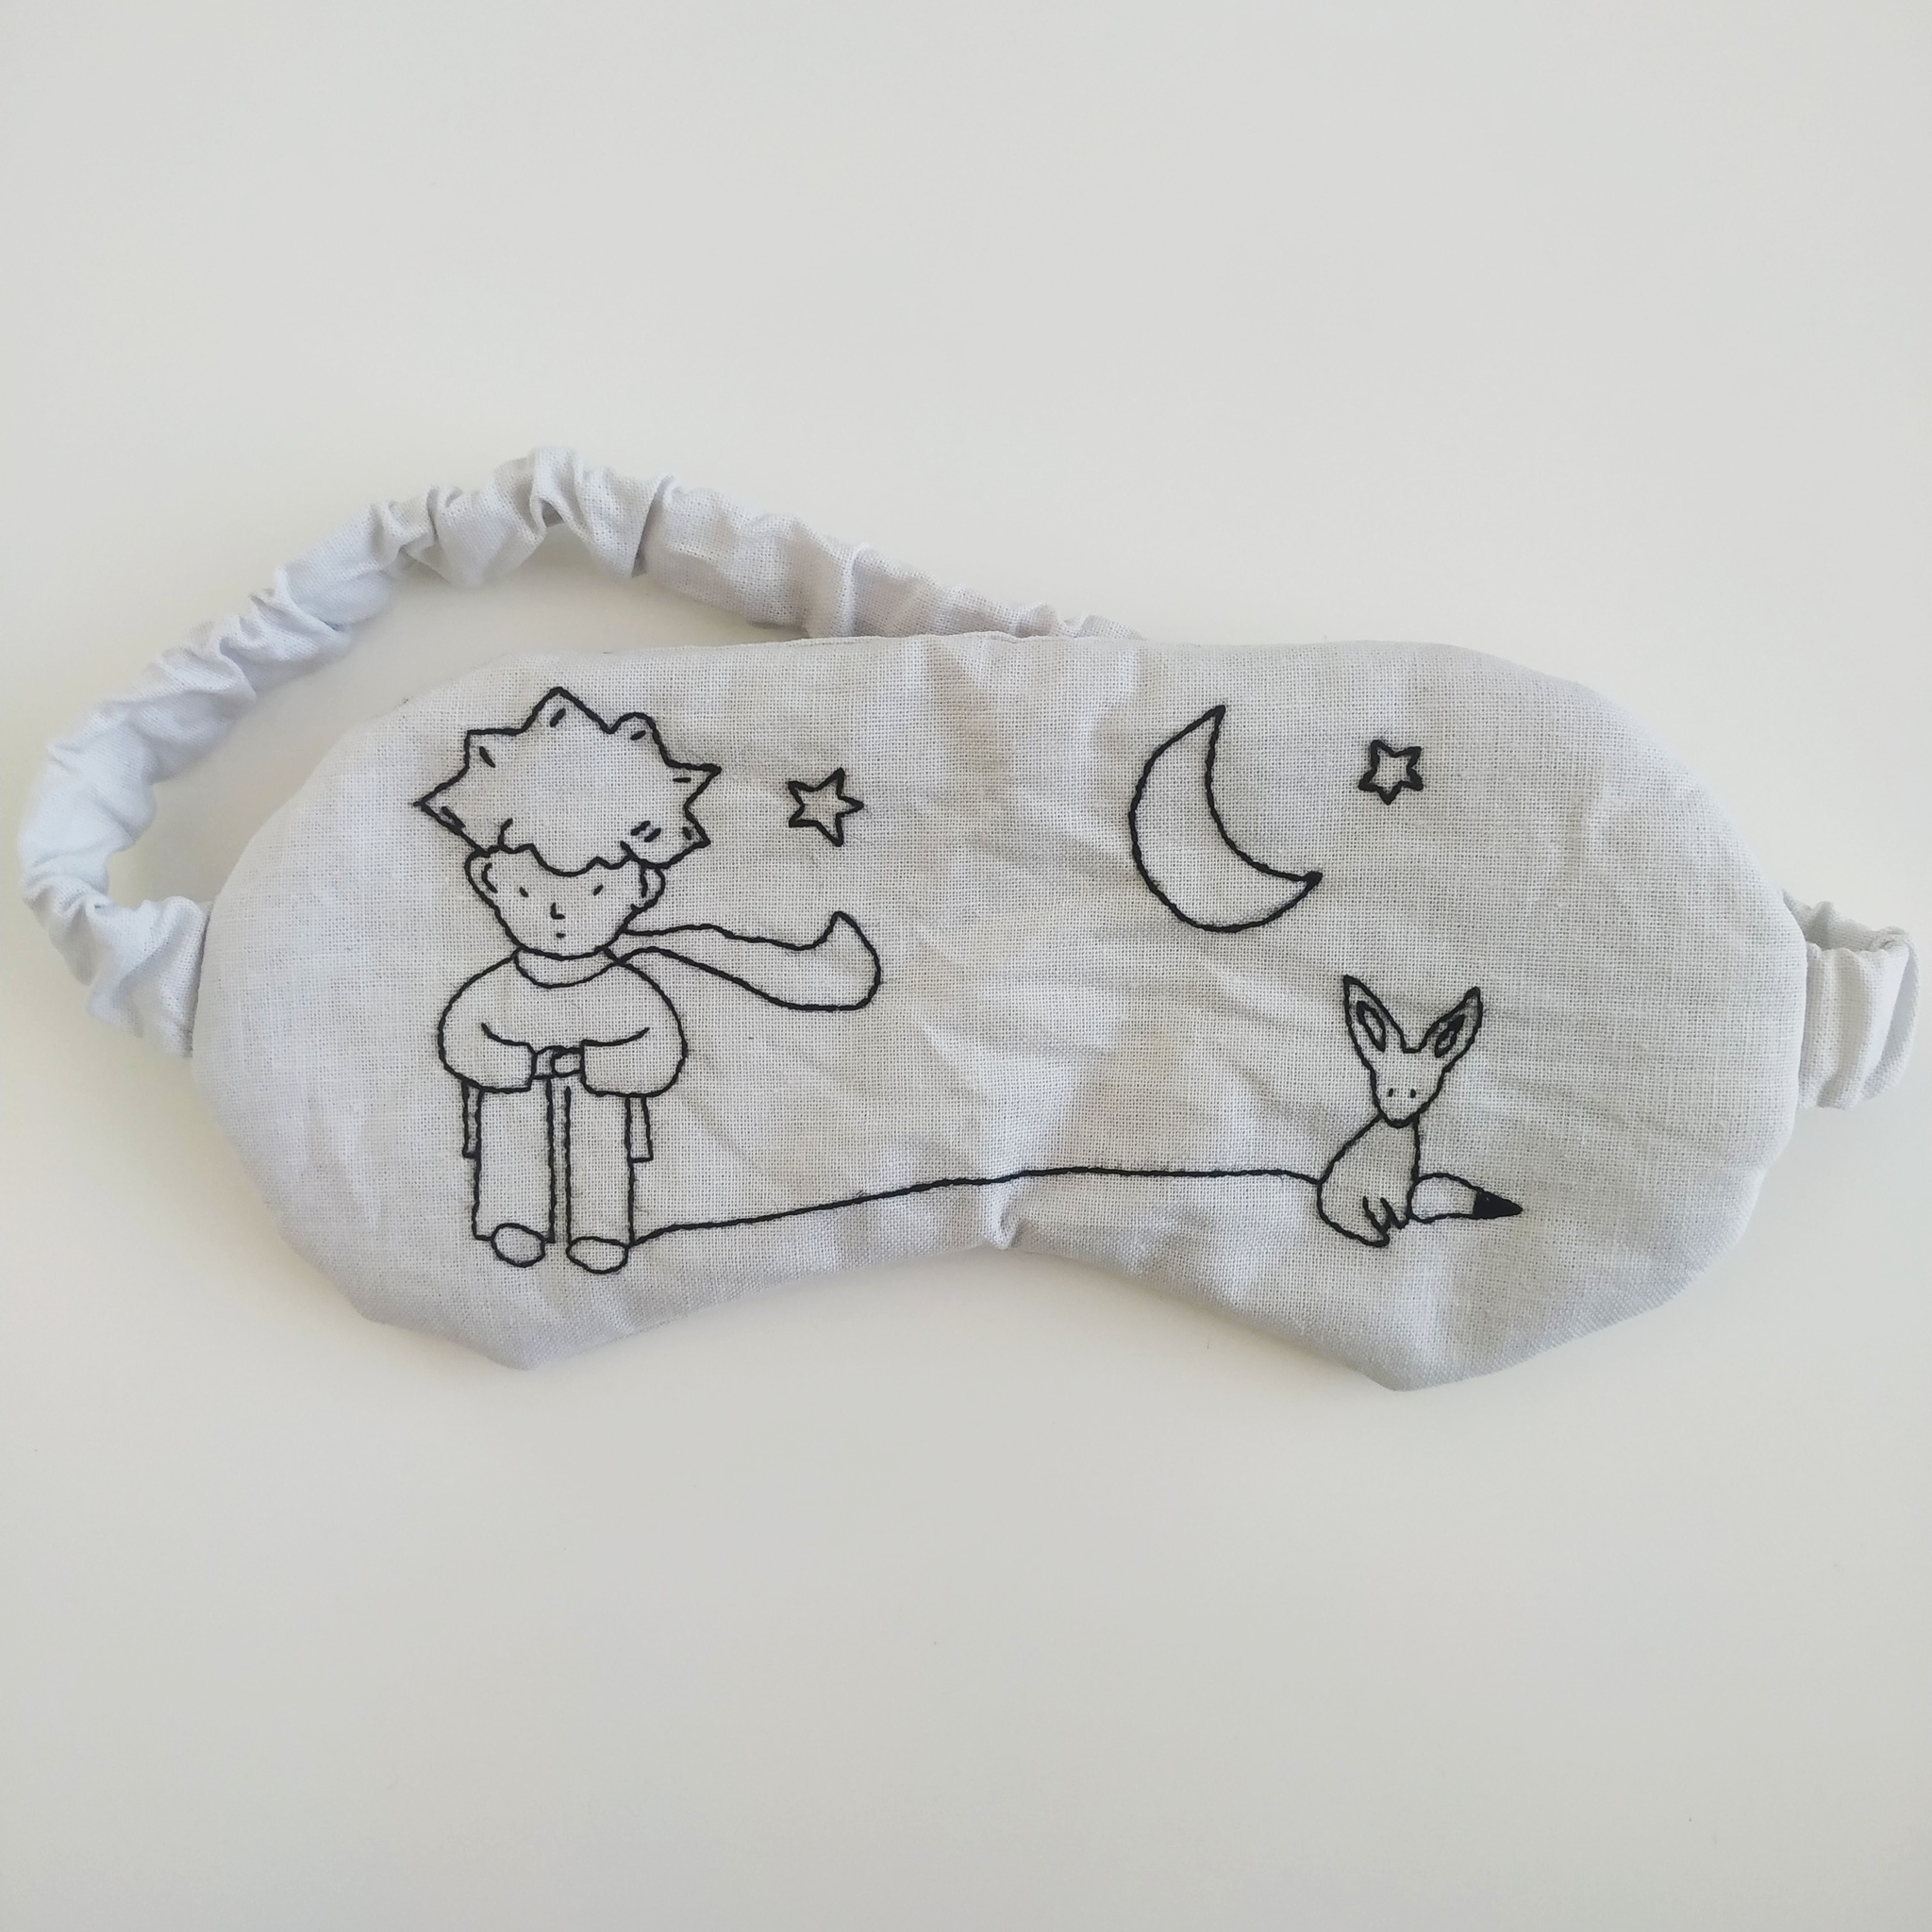 Embroidered masks - My, Embroidery, Sleep mask, Needlework without process, Longpost